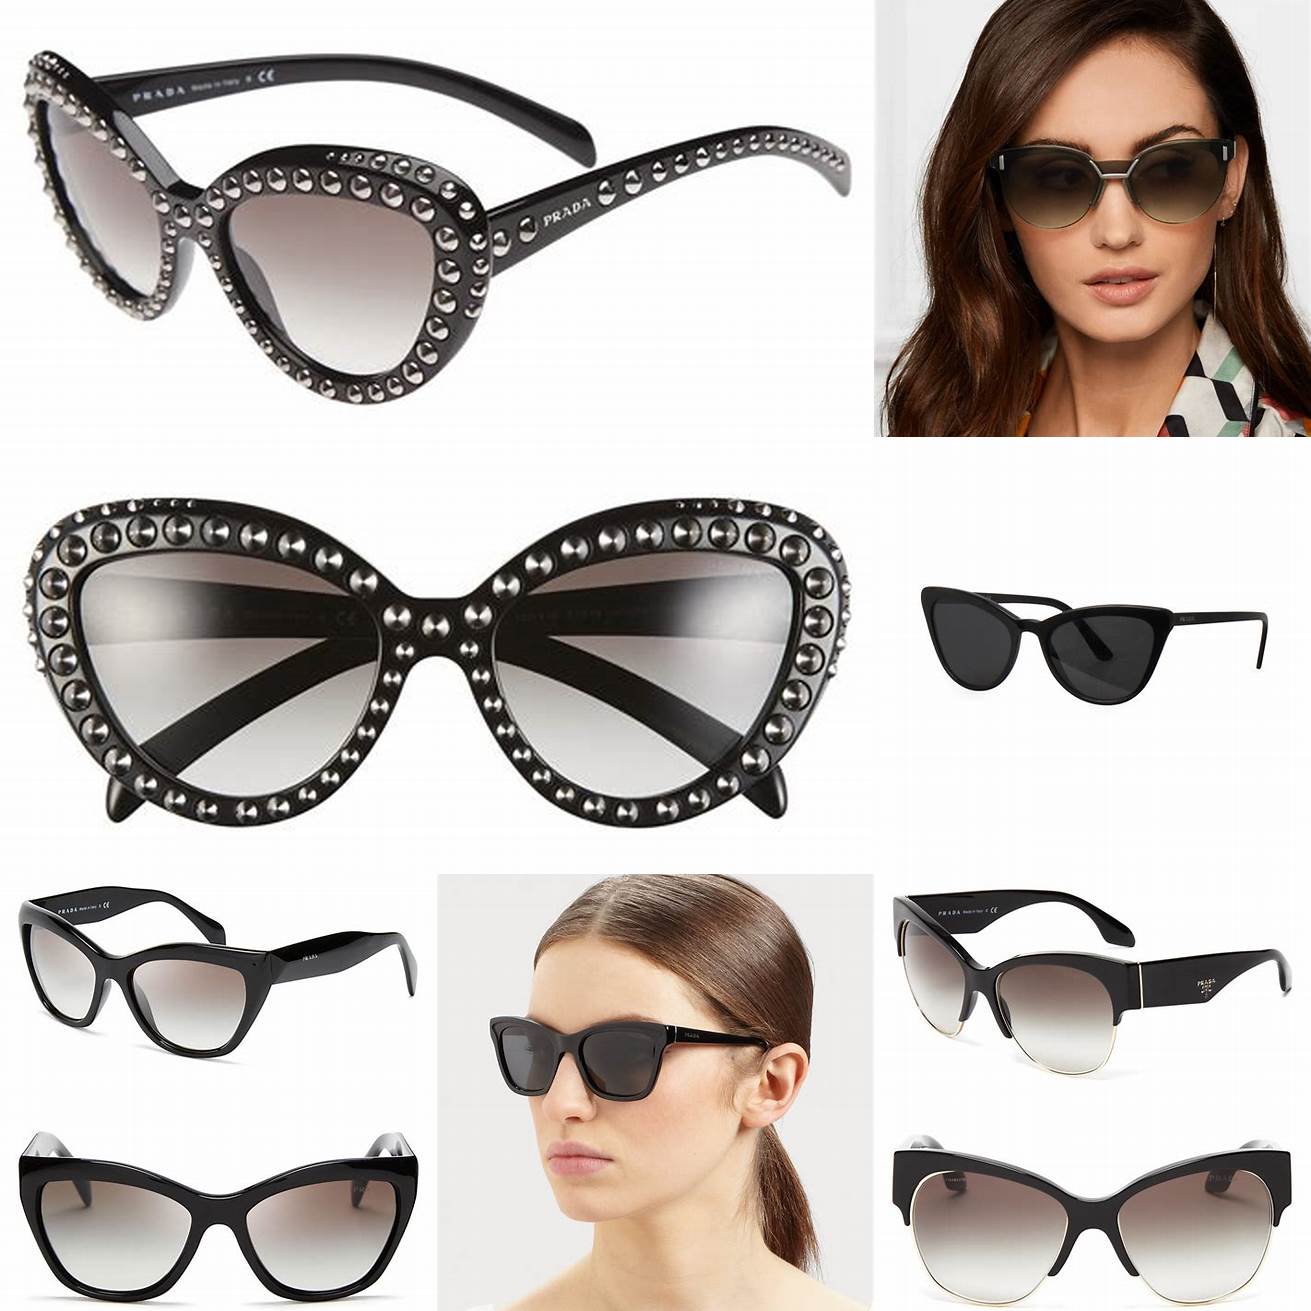 Q Are Prada cat eye sunglasses worth the investment